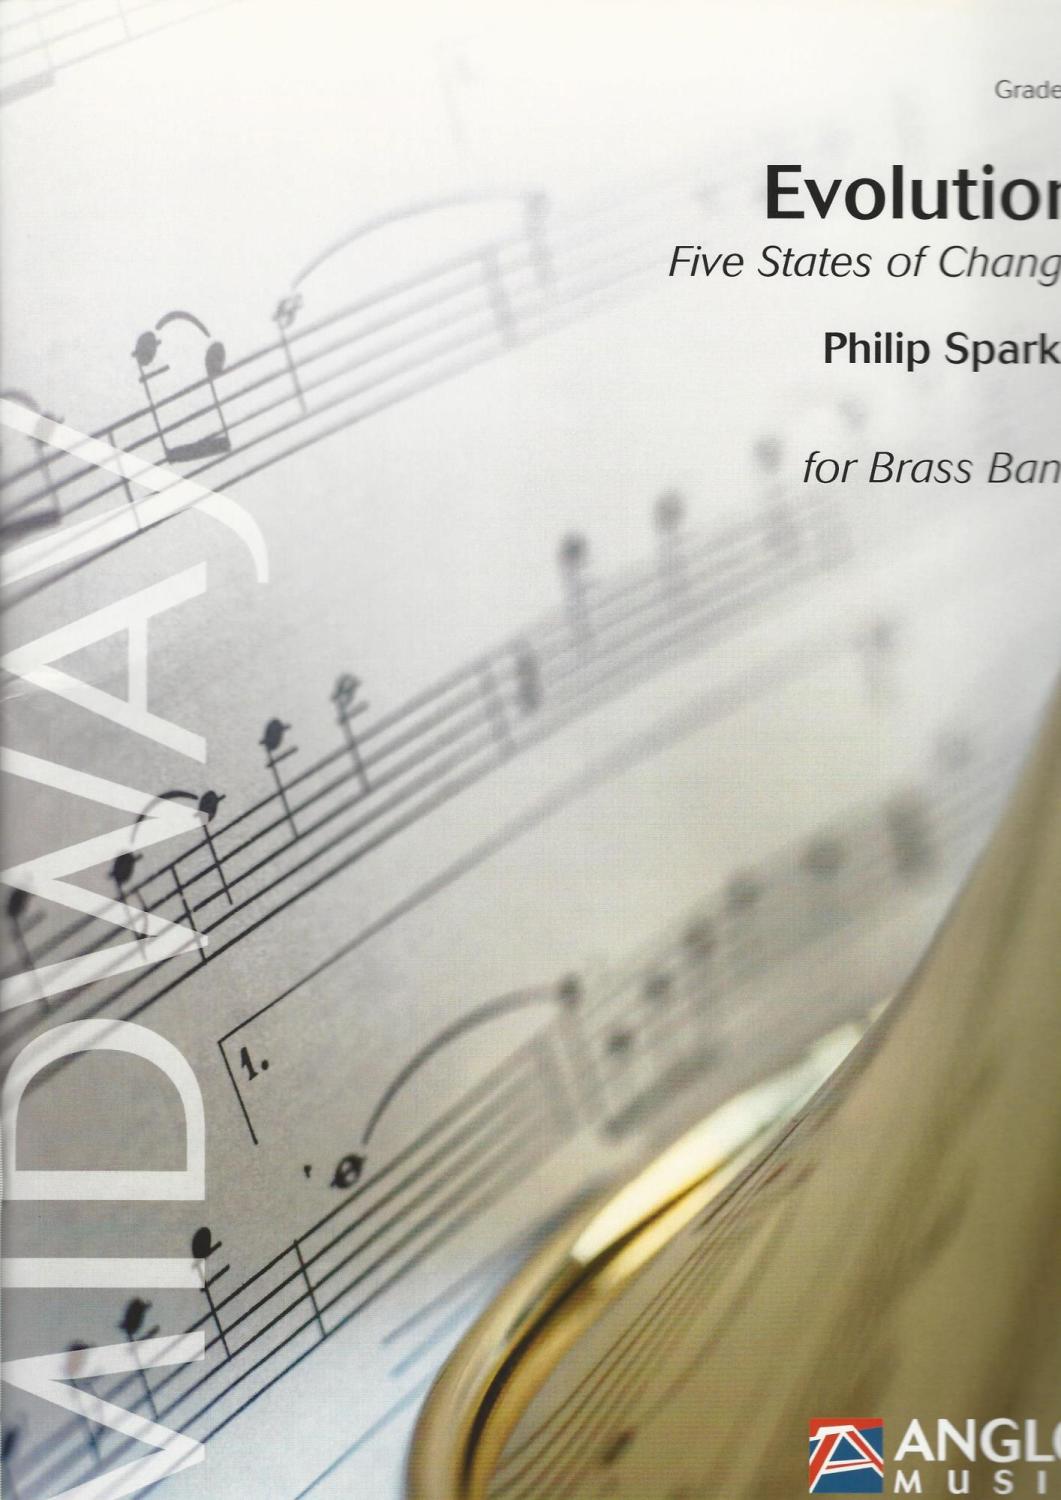 Evolution Five States of Change for Brass Band arr. Philip Sparke